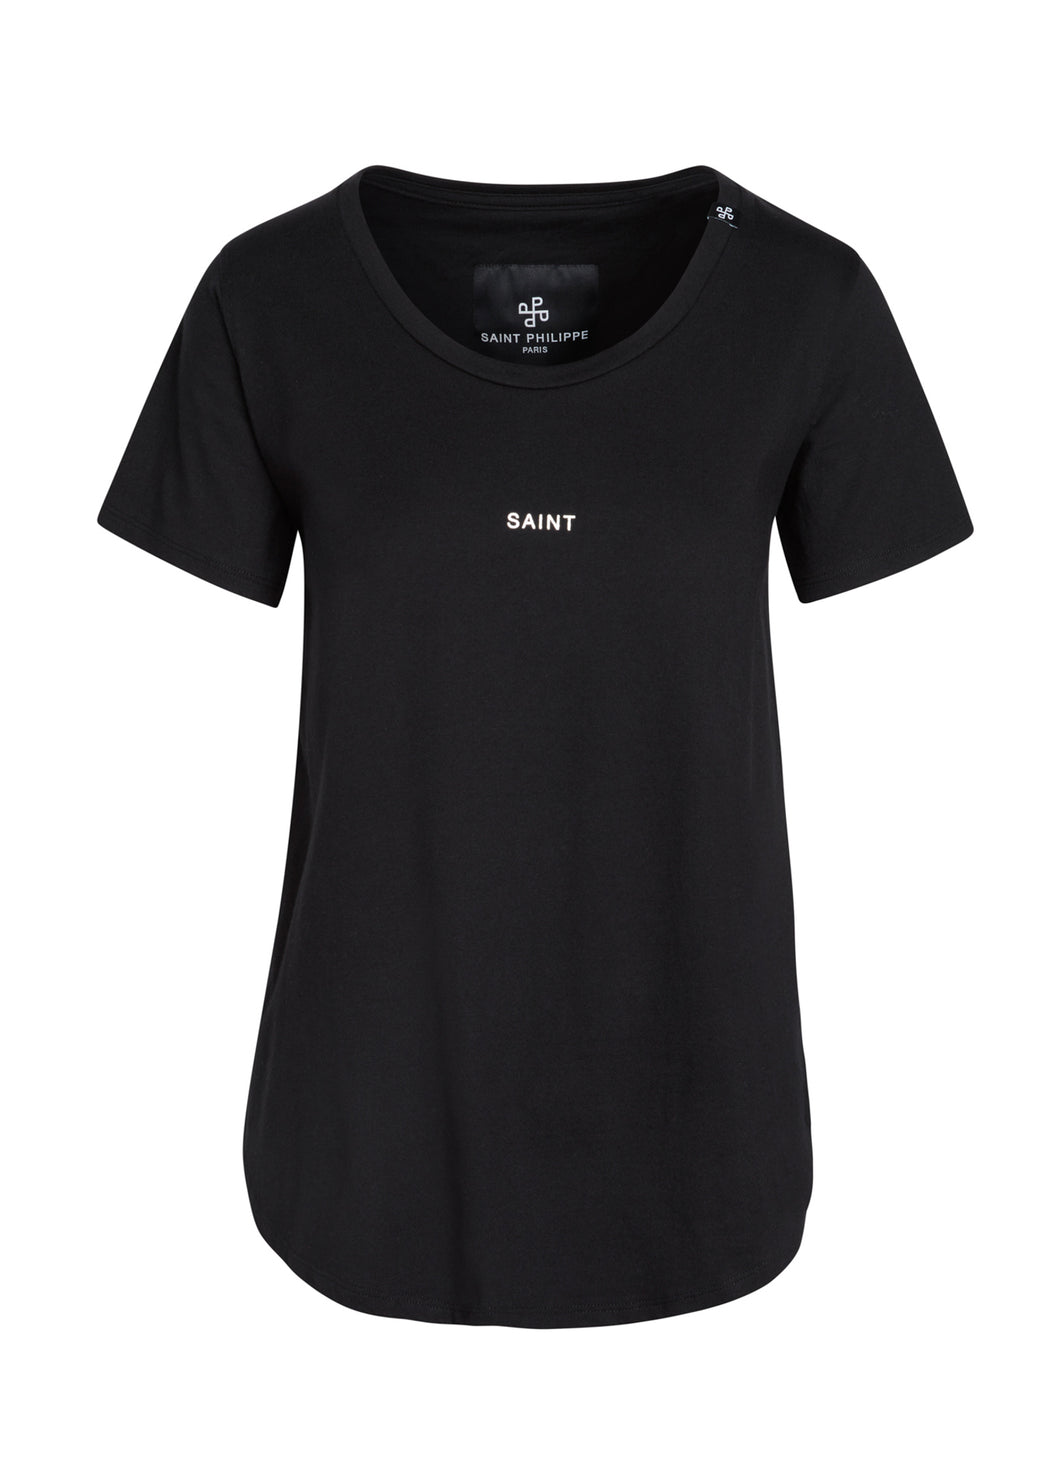 Women's Saint Shirt Black